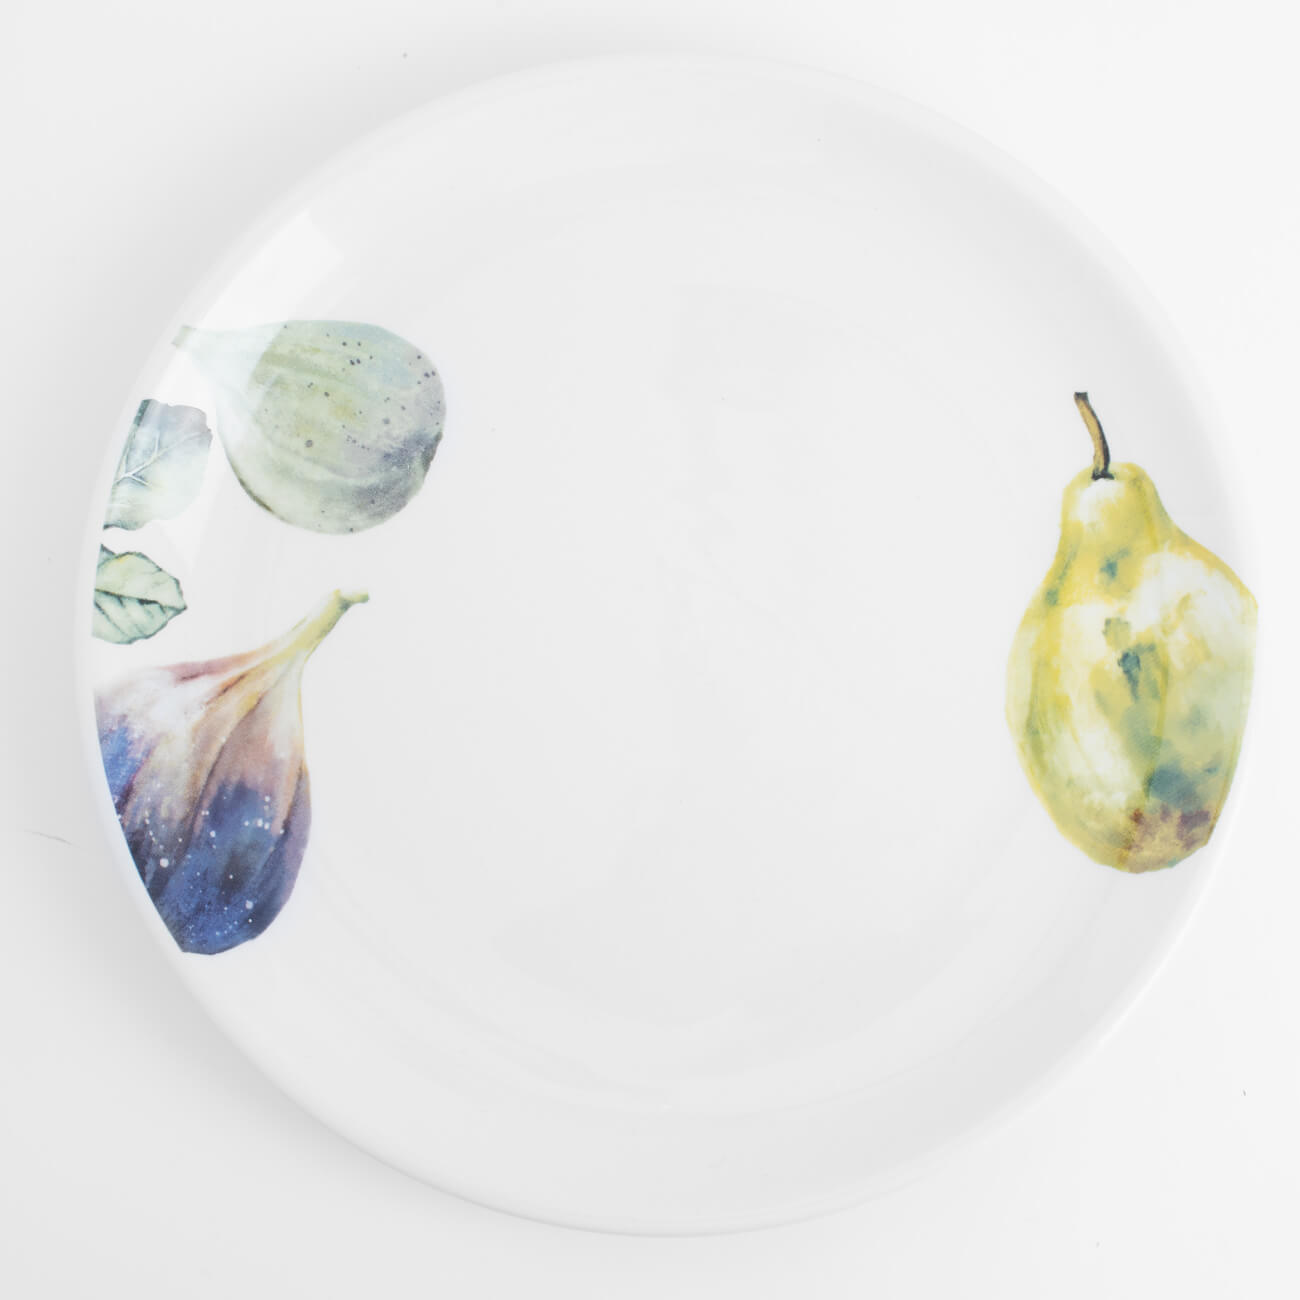 Тарелка закусочная, 21 см, керамика, белая, Инжир и груша, Fruit garden тарелка для закусок